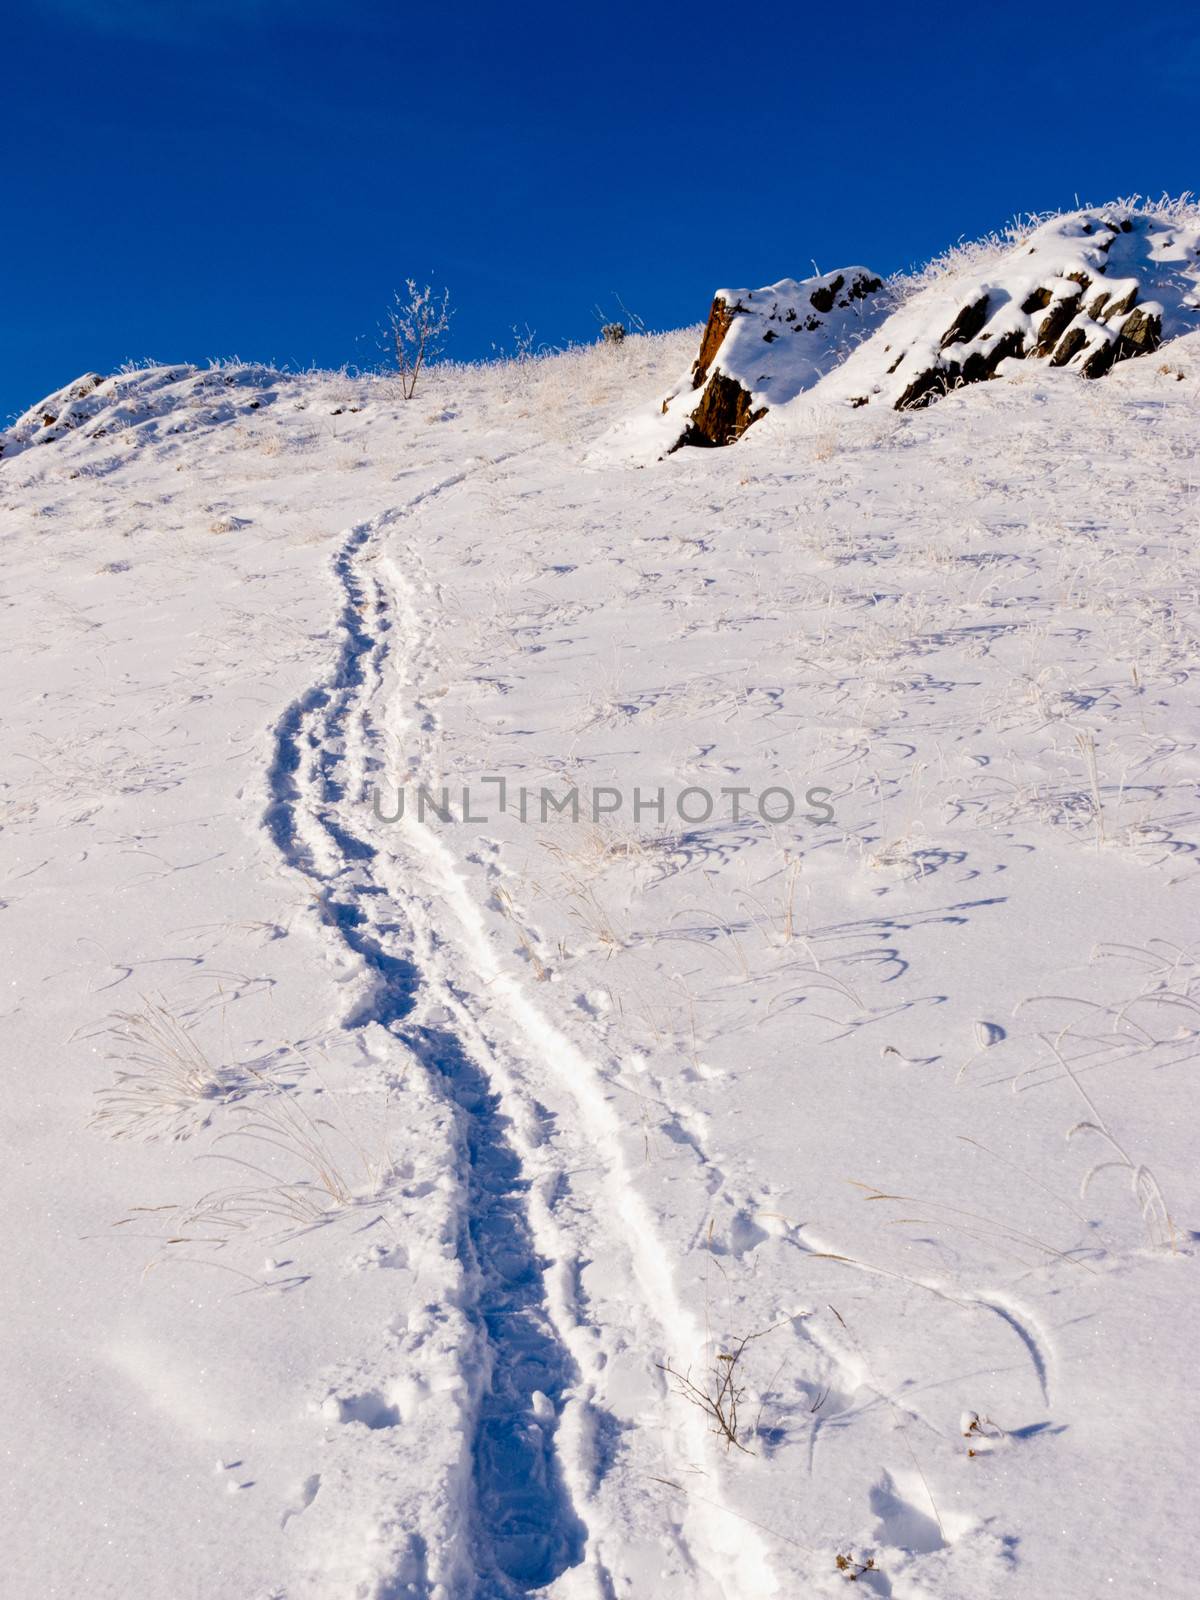 Snow-shoe track prints in deep powder leading up hillside slope pristine winter wonderland wilderness